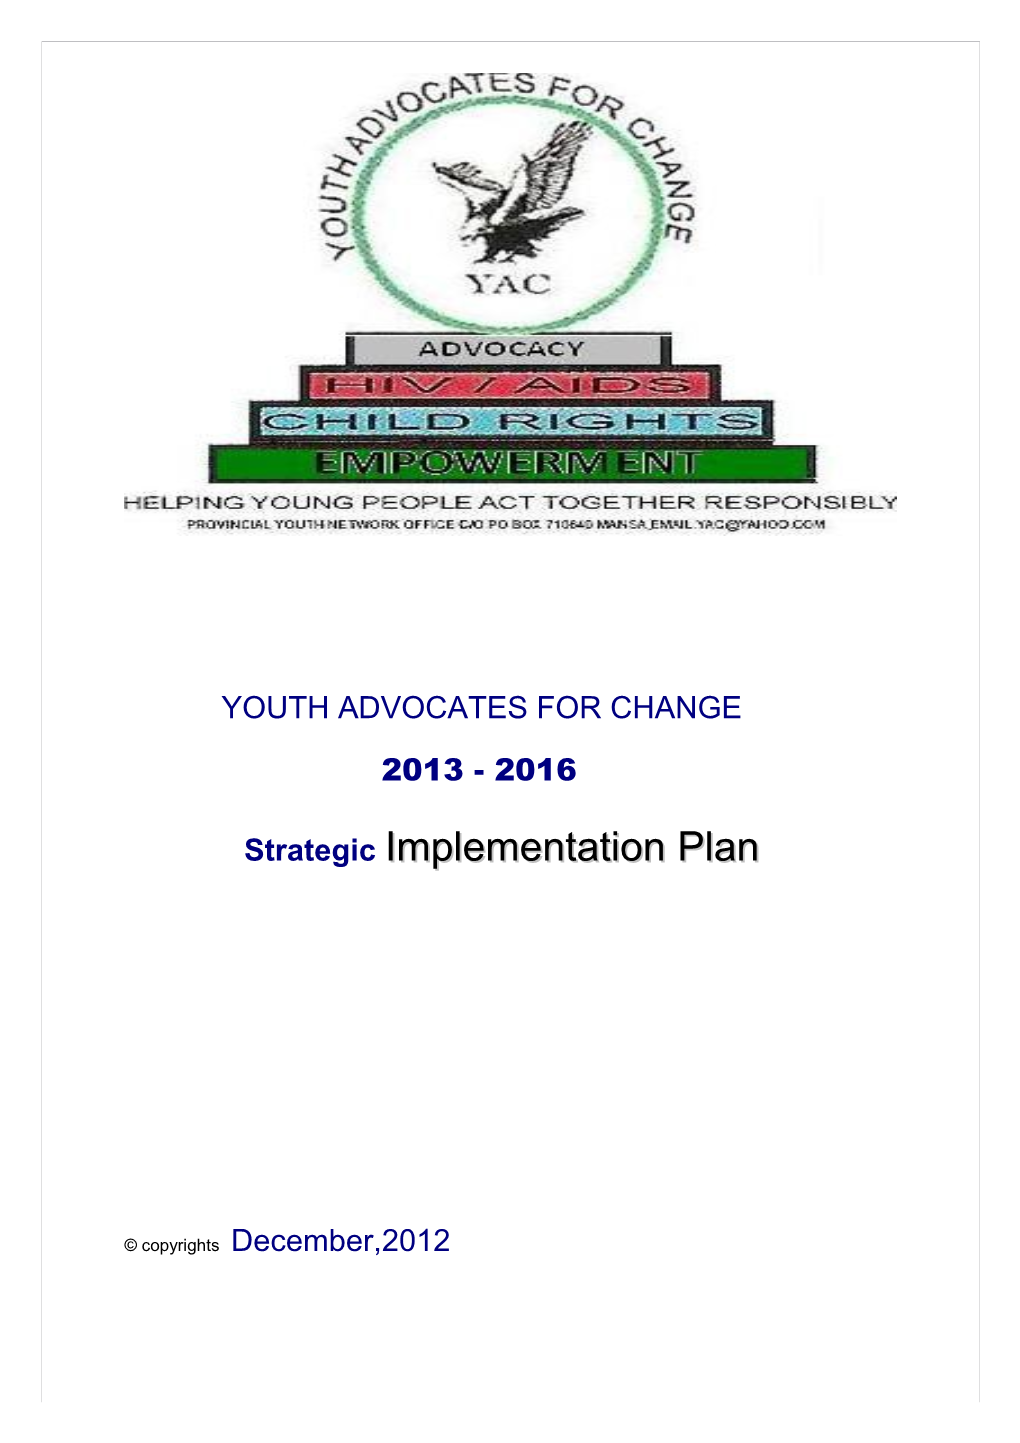 YAC Strategic Implementation Plan 2013-2016